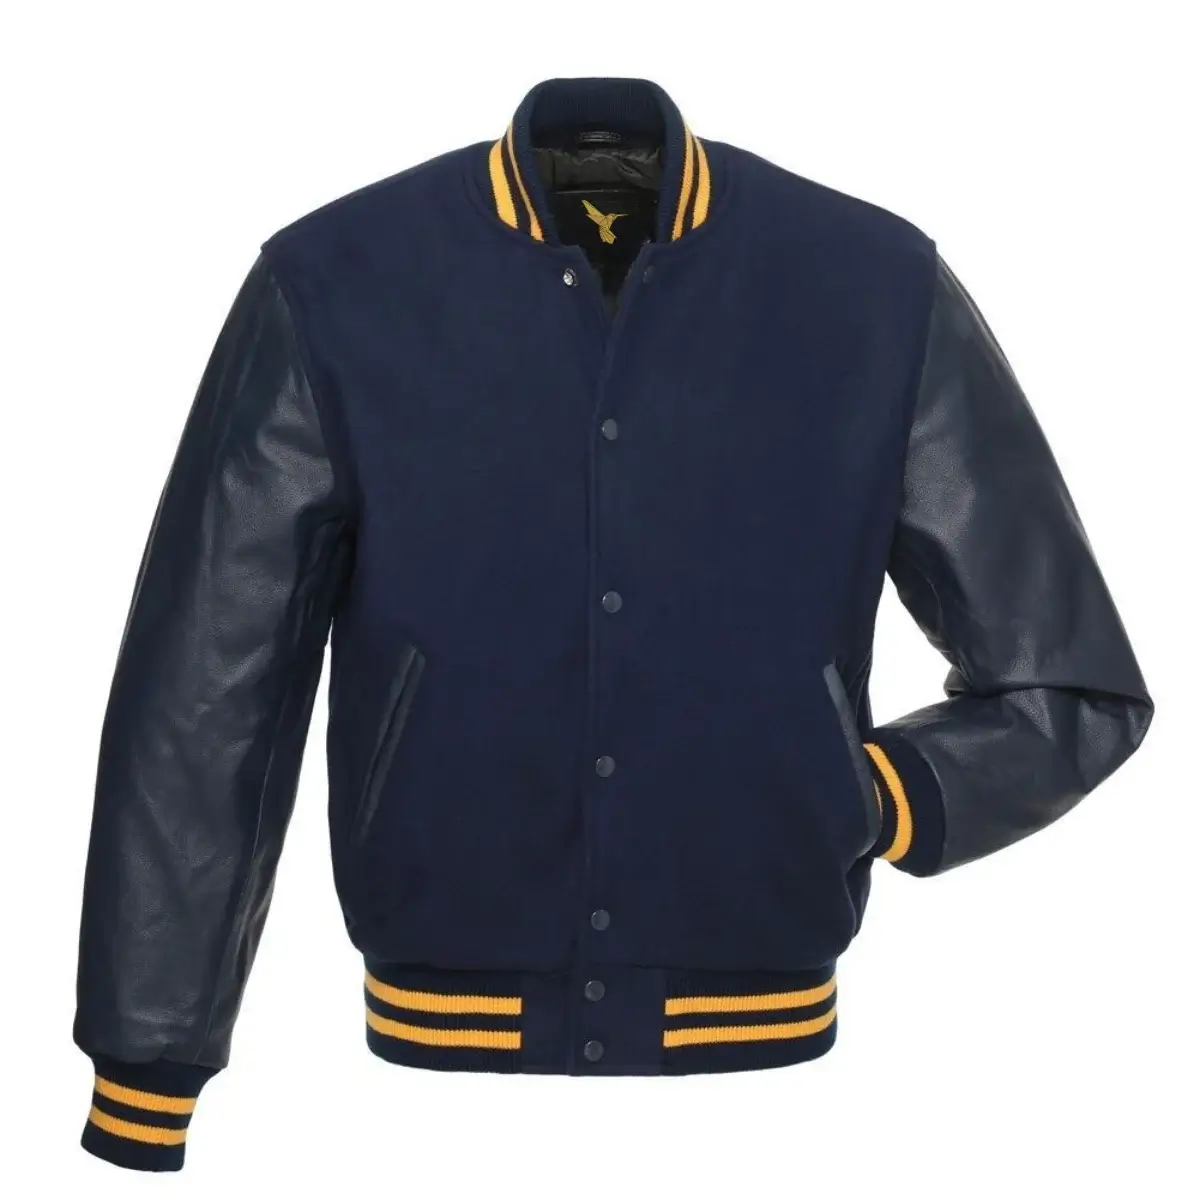 Right Image of Men's Varsity Jacket